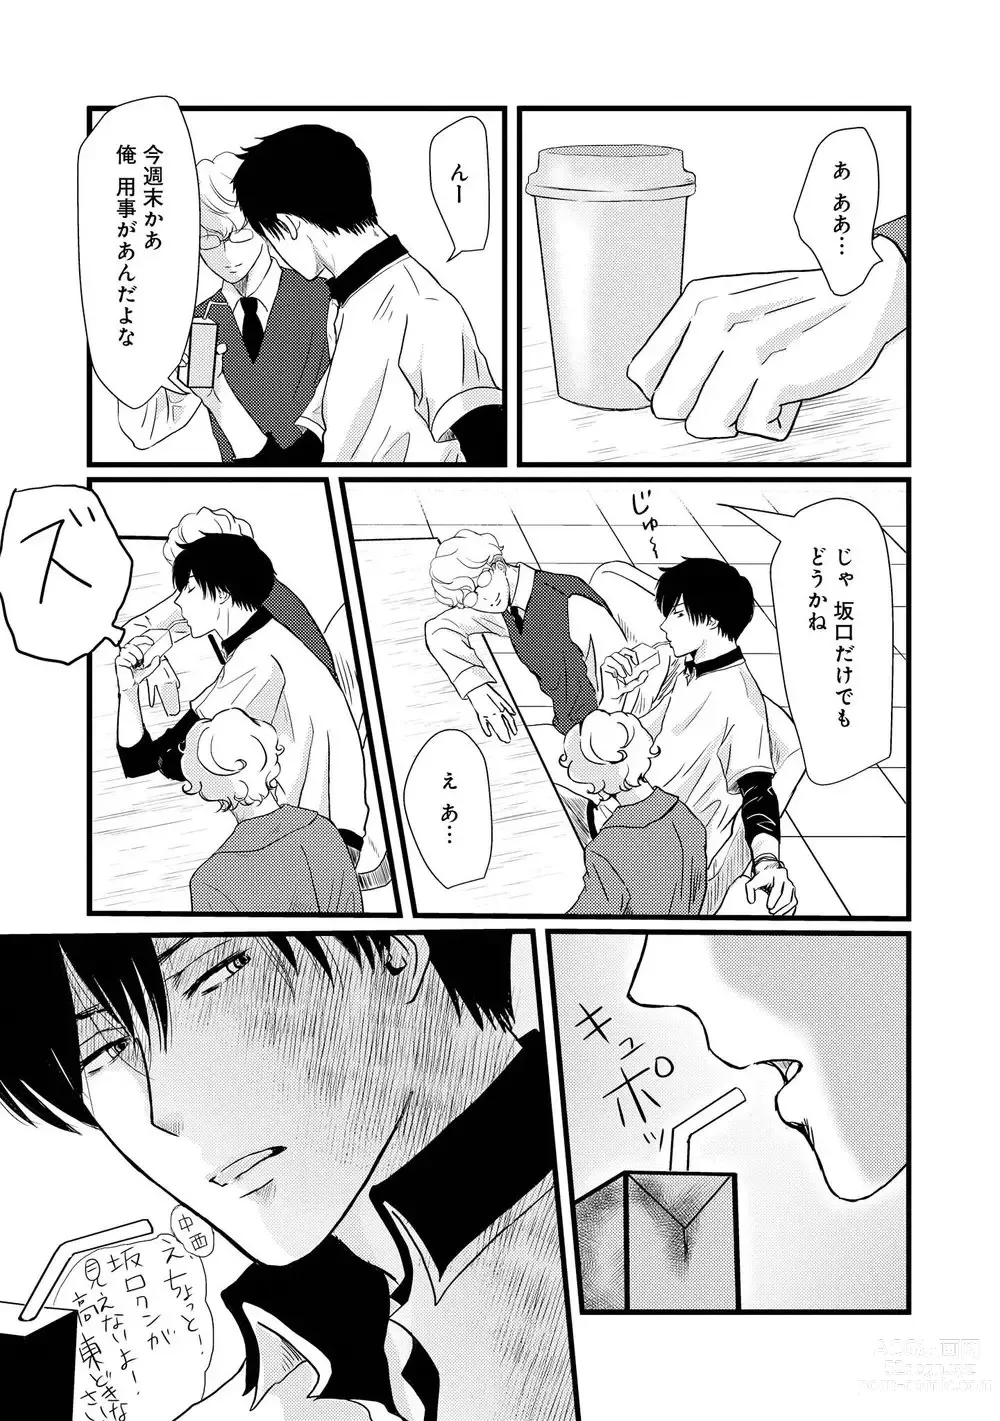 Page 21 of manga AHOERO